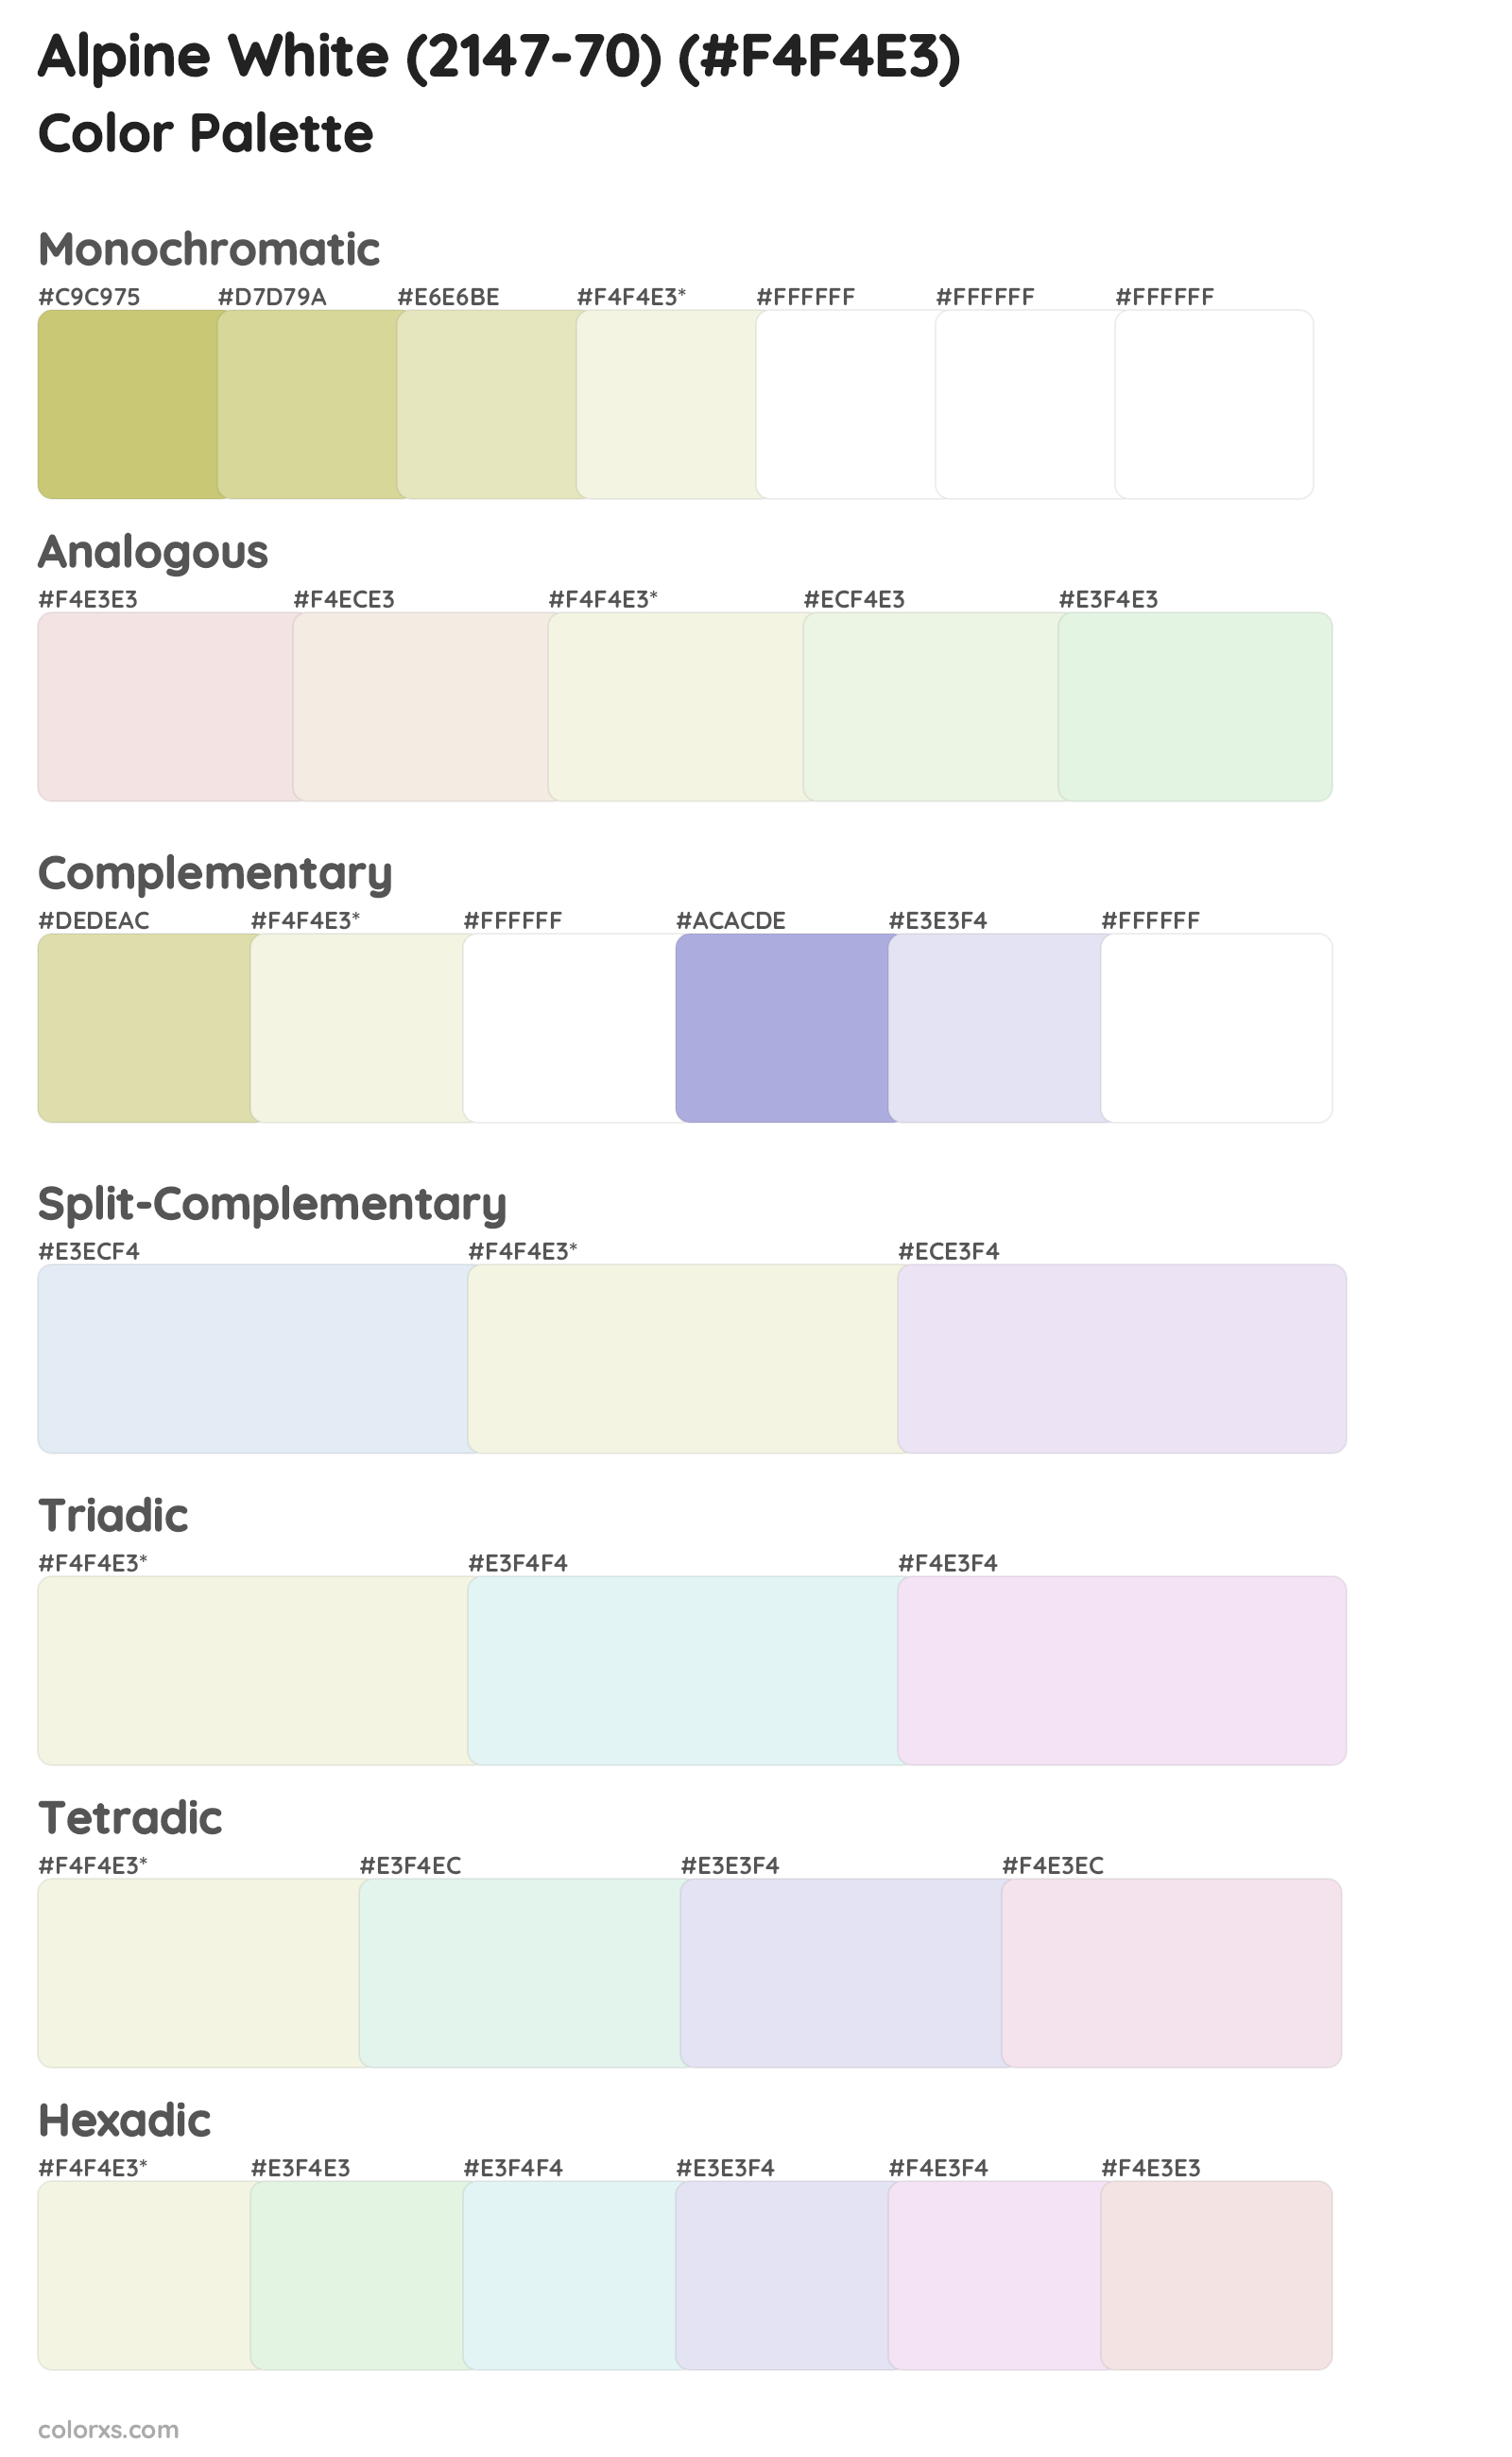 Alpine White (2147-70) Color Scheme Palettes